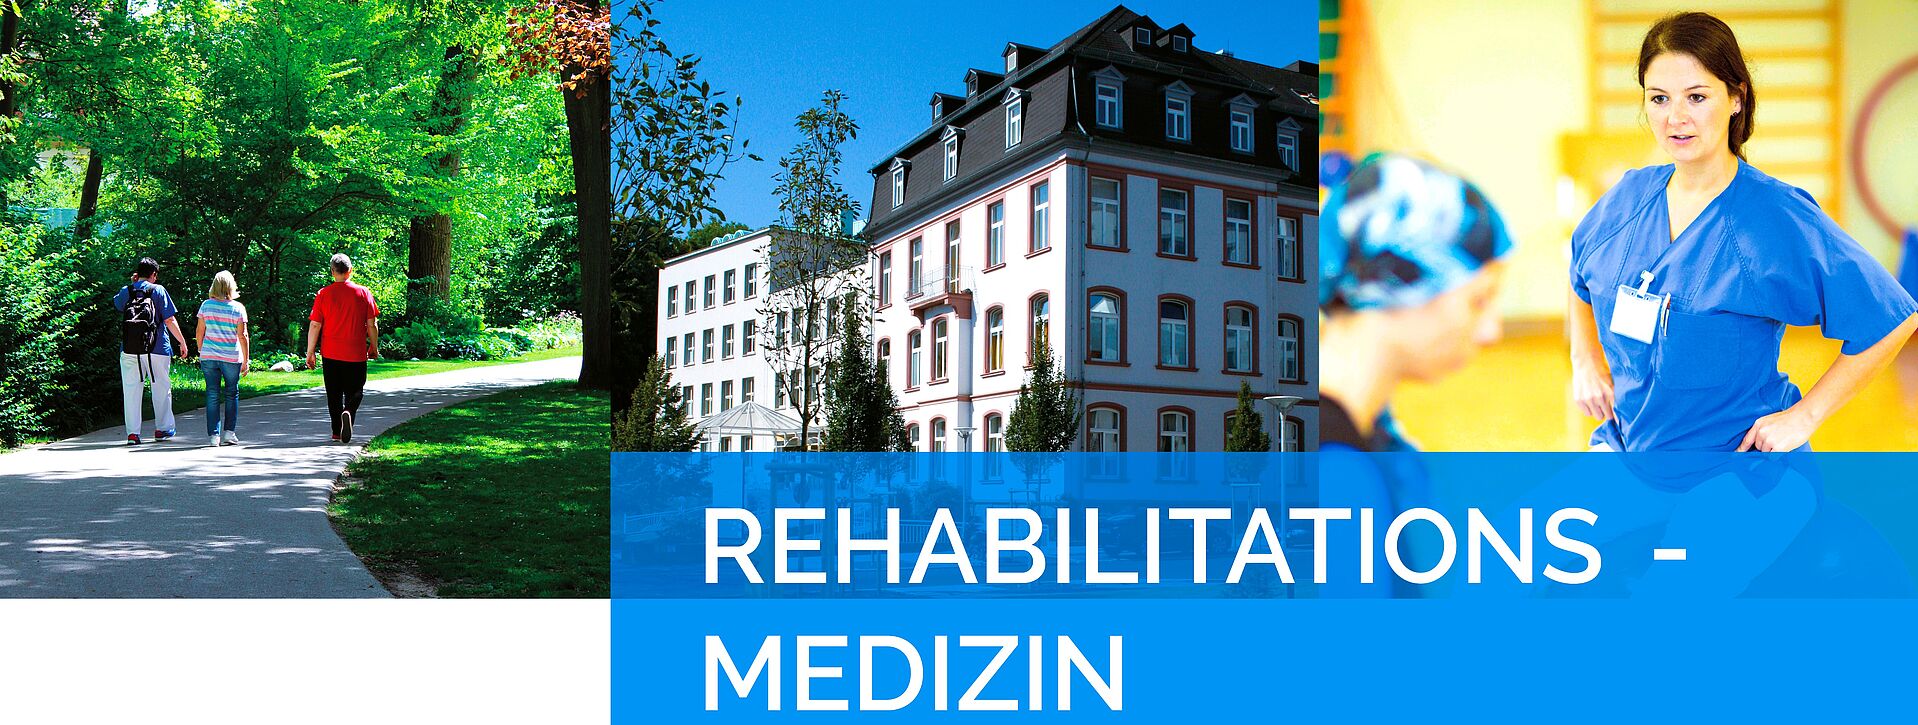 Rehabilitationsmedizin an der Kerckhoff-Klinik